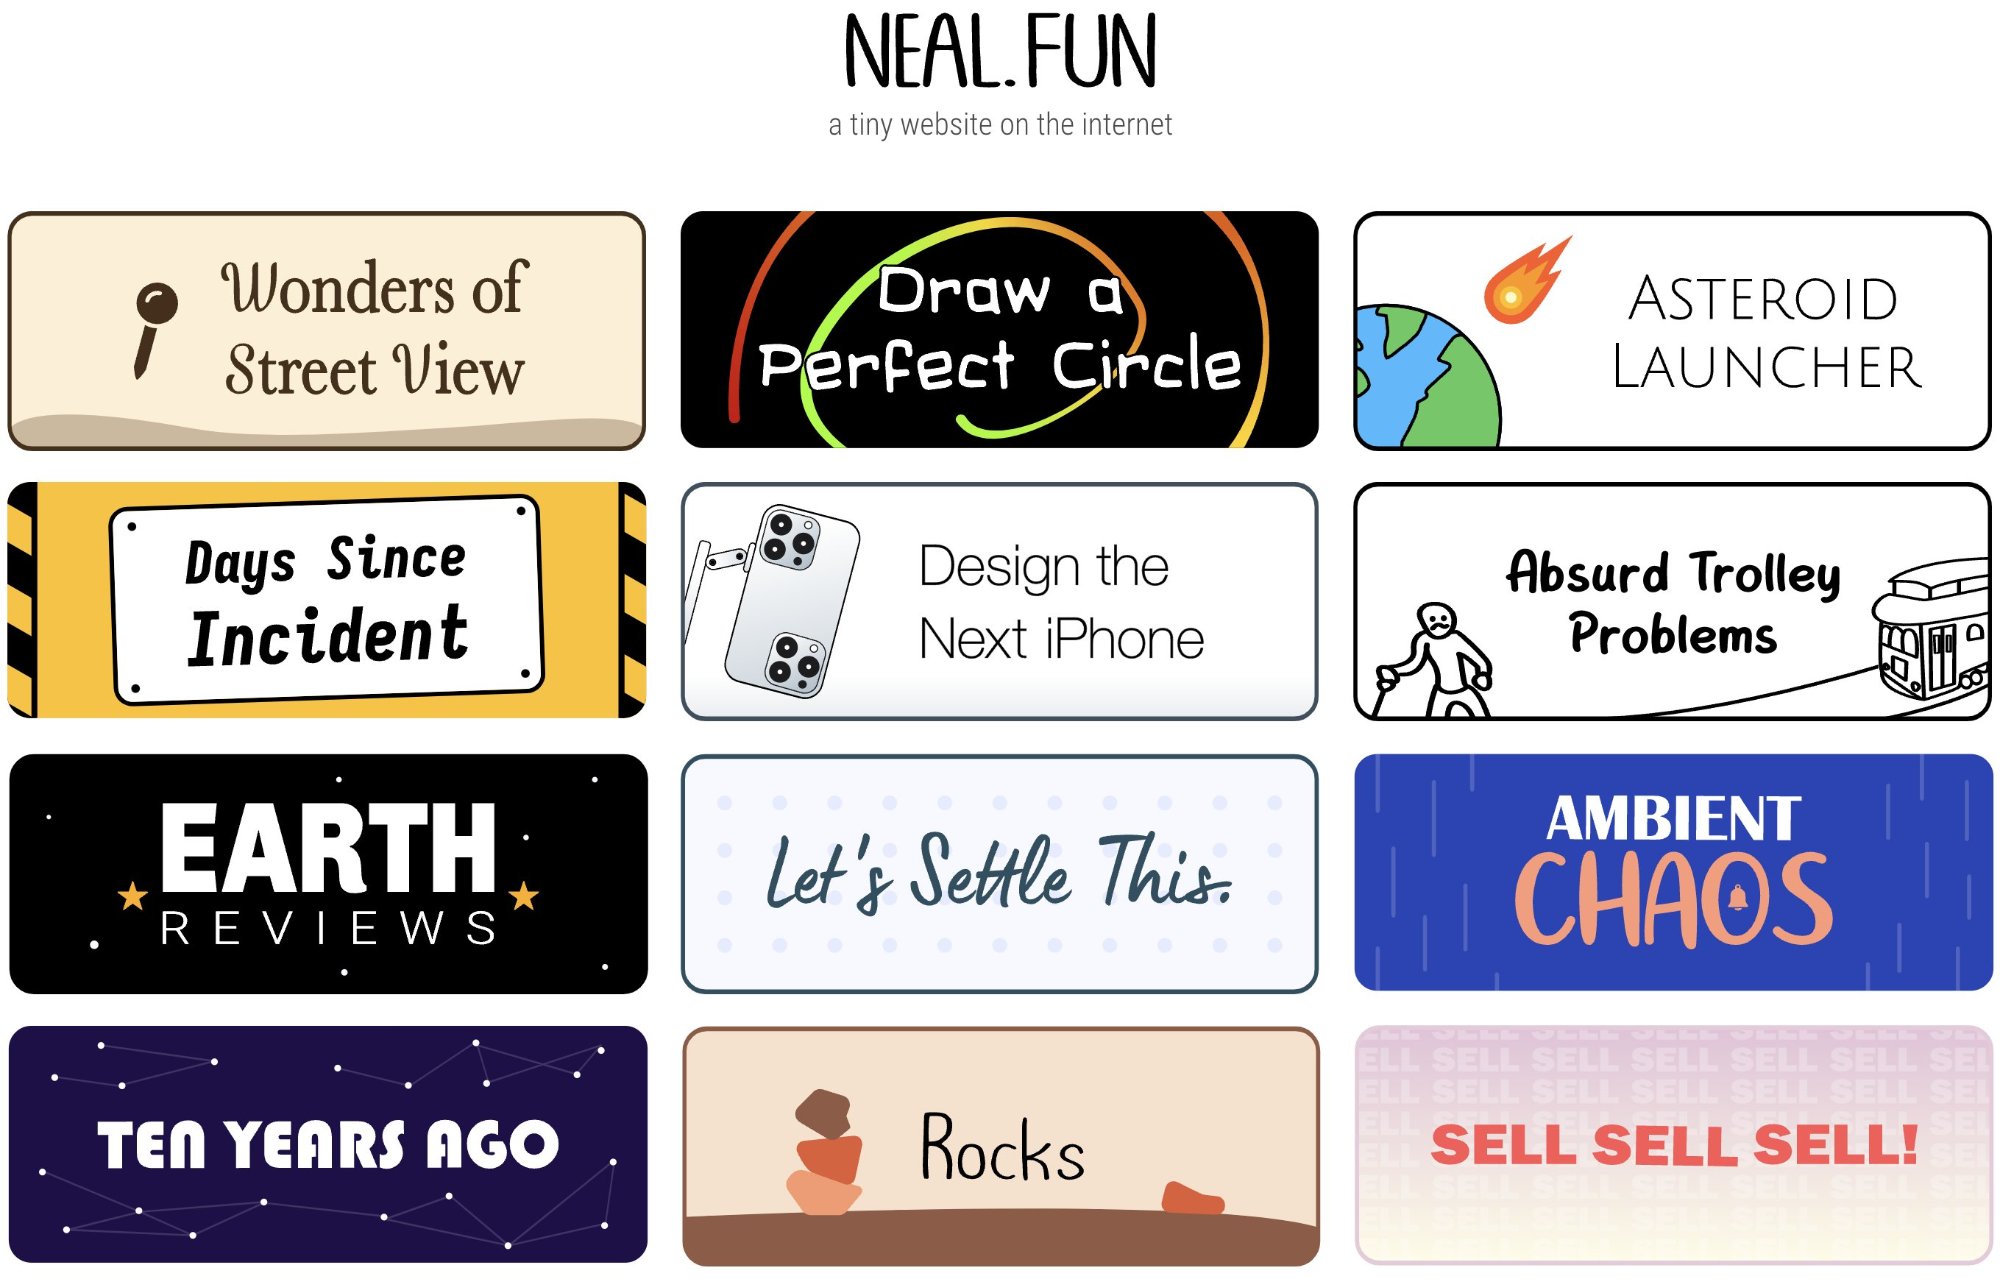 Neal fun. Neal fun на русском языке. Neal fun iphone Design. Neal fun потратьте деньги